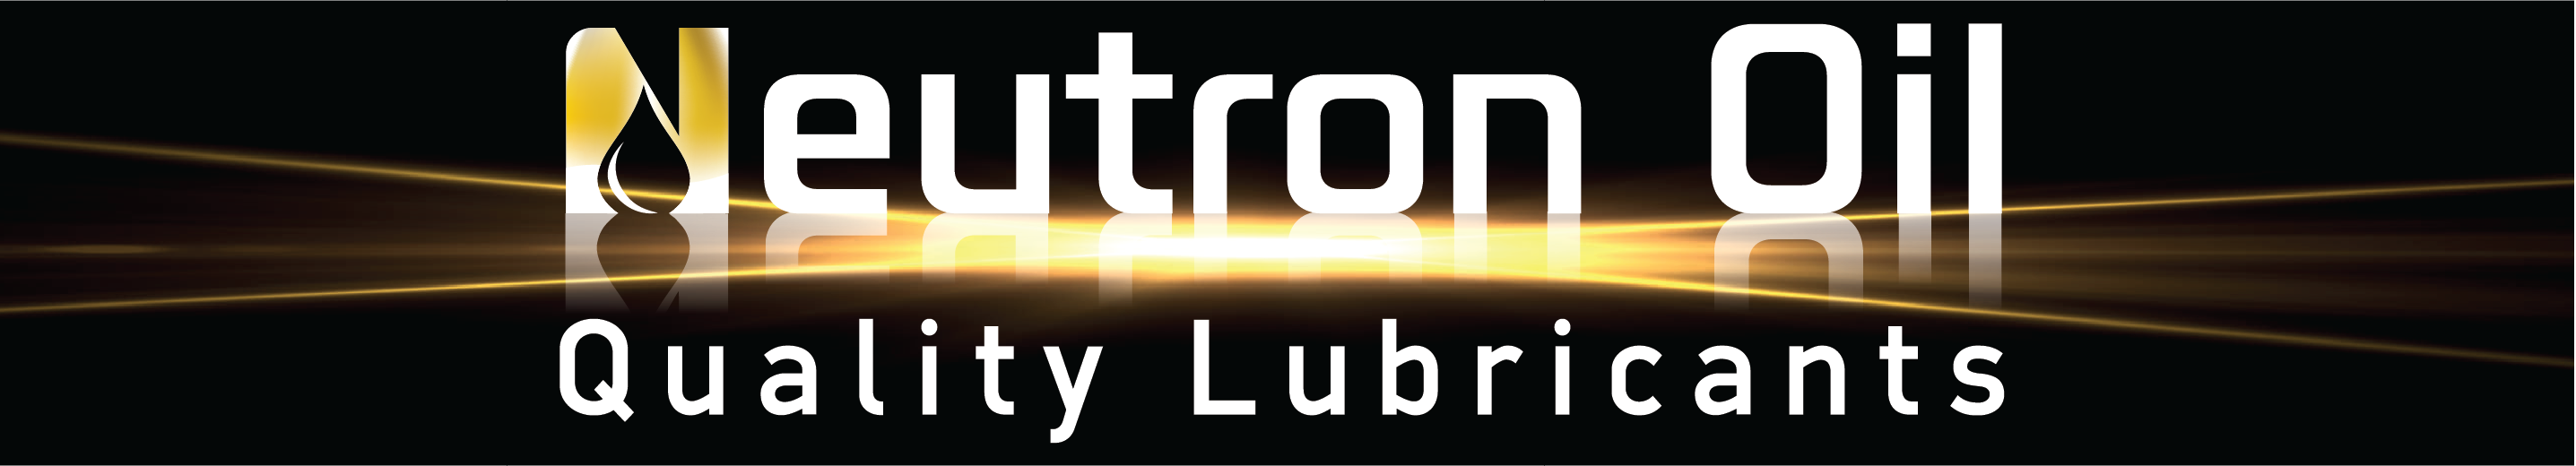 neutronoil logo